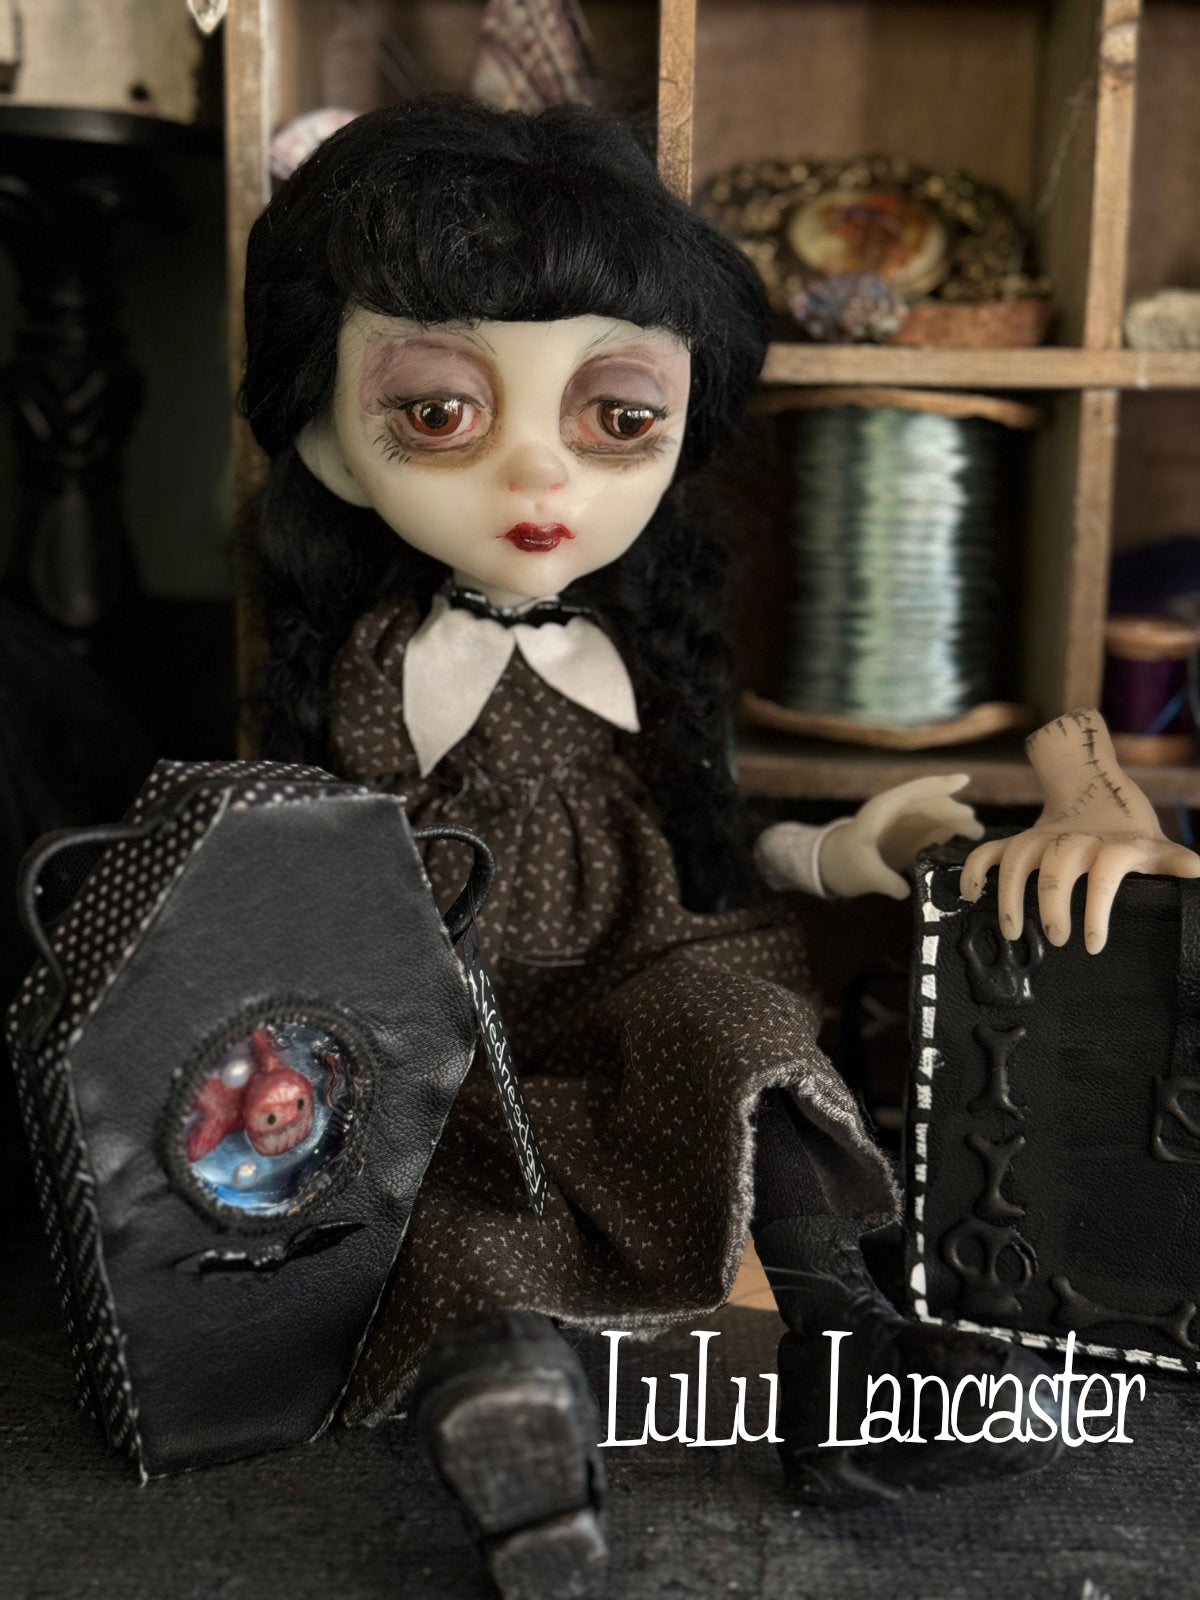 Traveling Wednesday and Thing Original LuLu Lancaster Art Doll